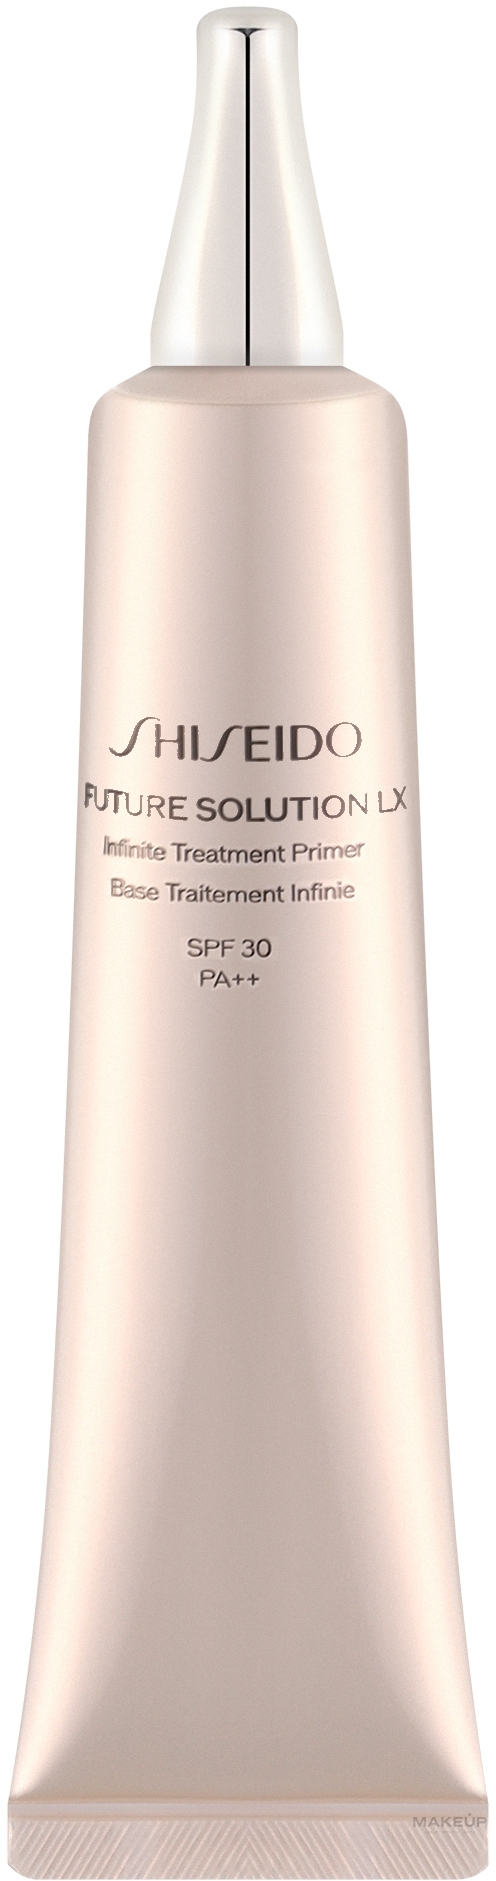 Baza do twarzy - Shiseido Future Solution LX Infinite Treatment Primer SPF30 PA++ — Zdjęcie 40 ml